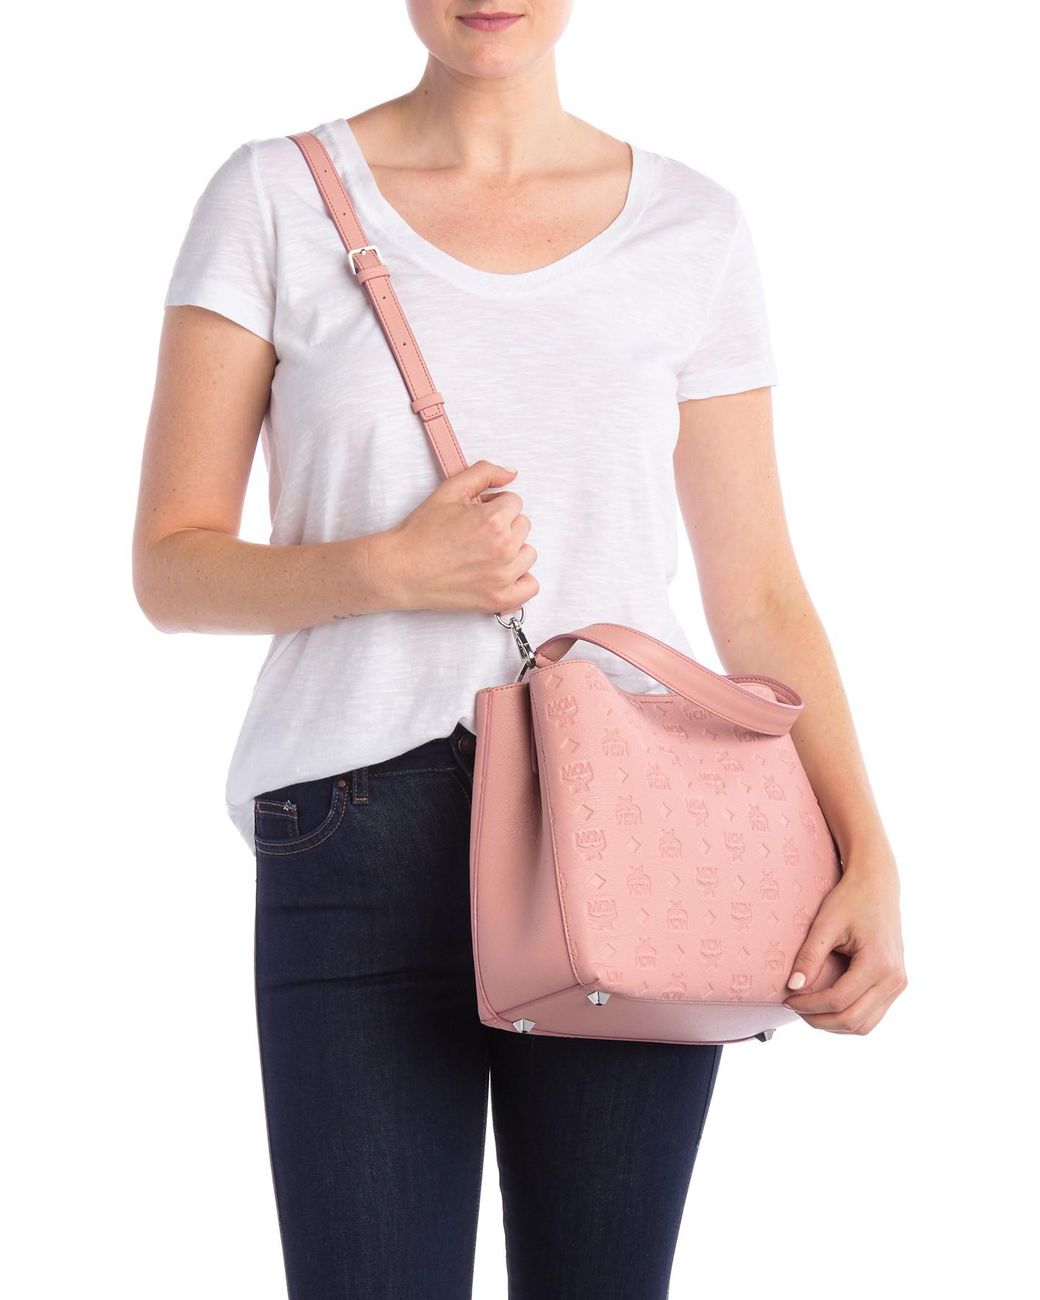 MCM Sarah Monogrammed Leather Hobo Bag in Pink